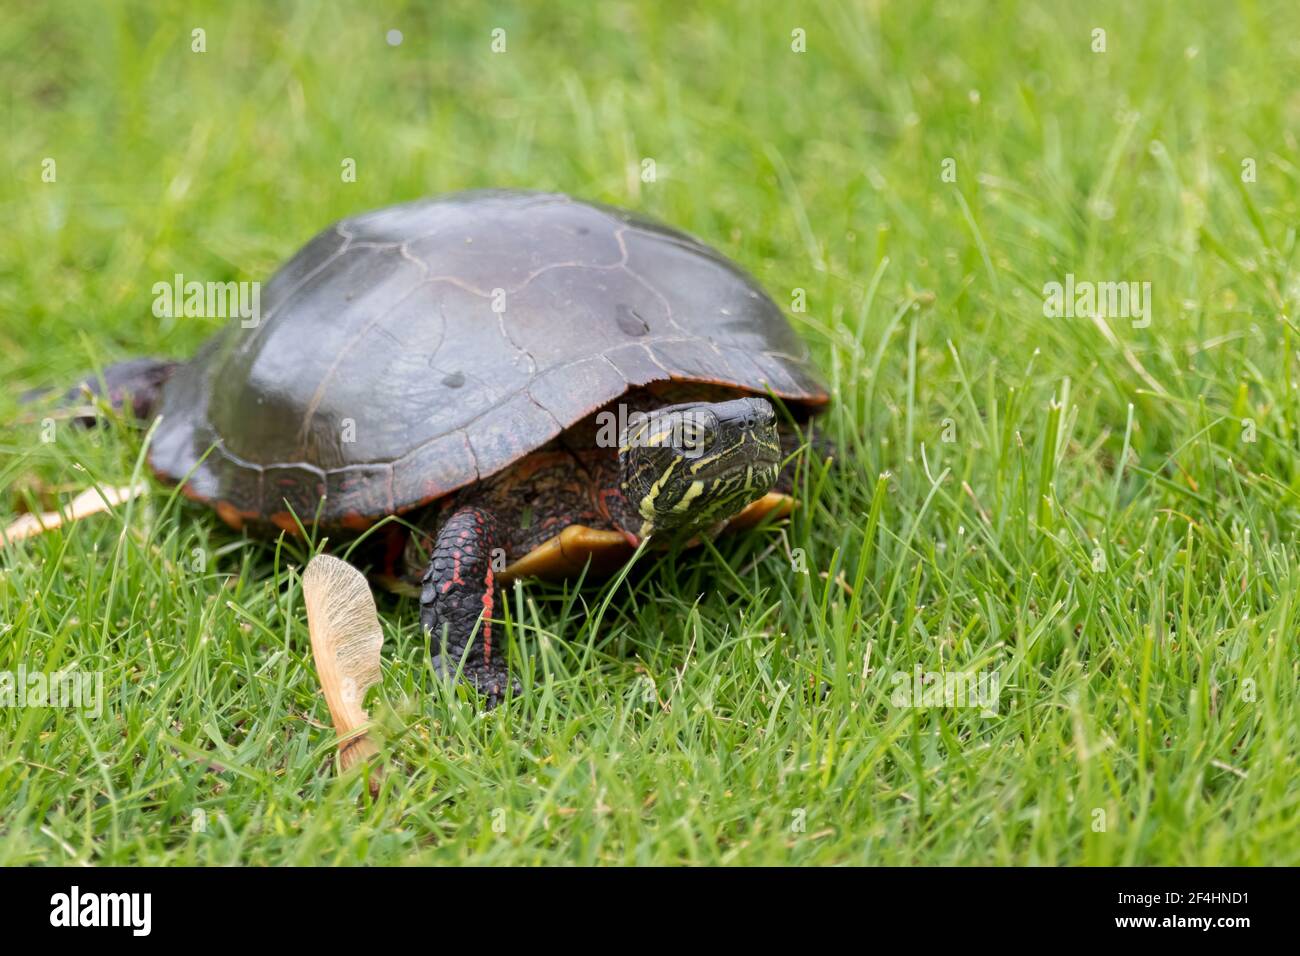 Tartaruga dipinta che si fa strada lentamente attraverso l'erba verde dewy Foto Stock